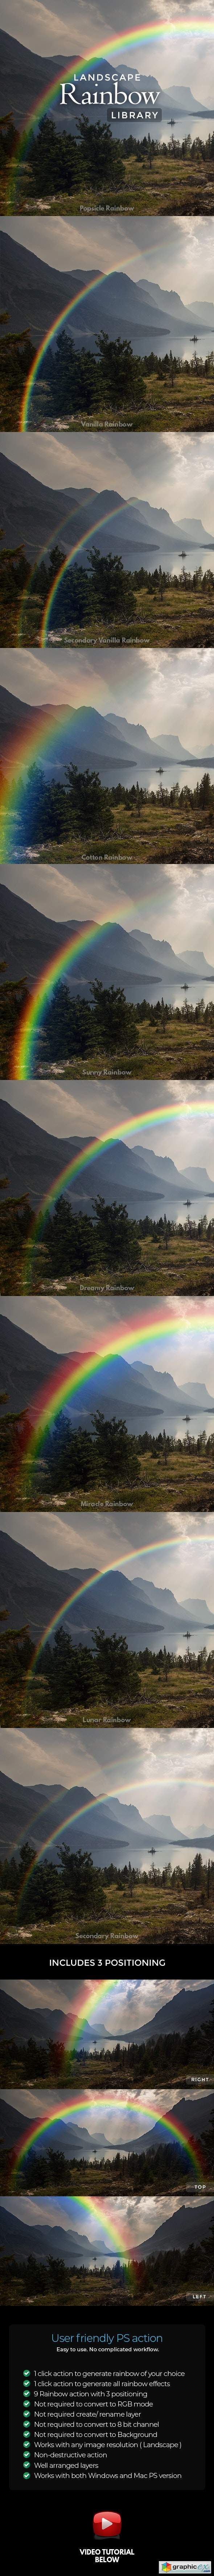 Landscape Rainbow Library - Photoshop Action